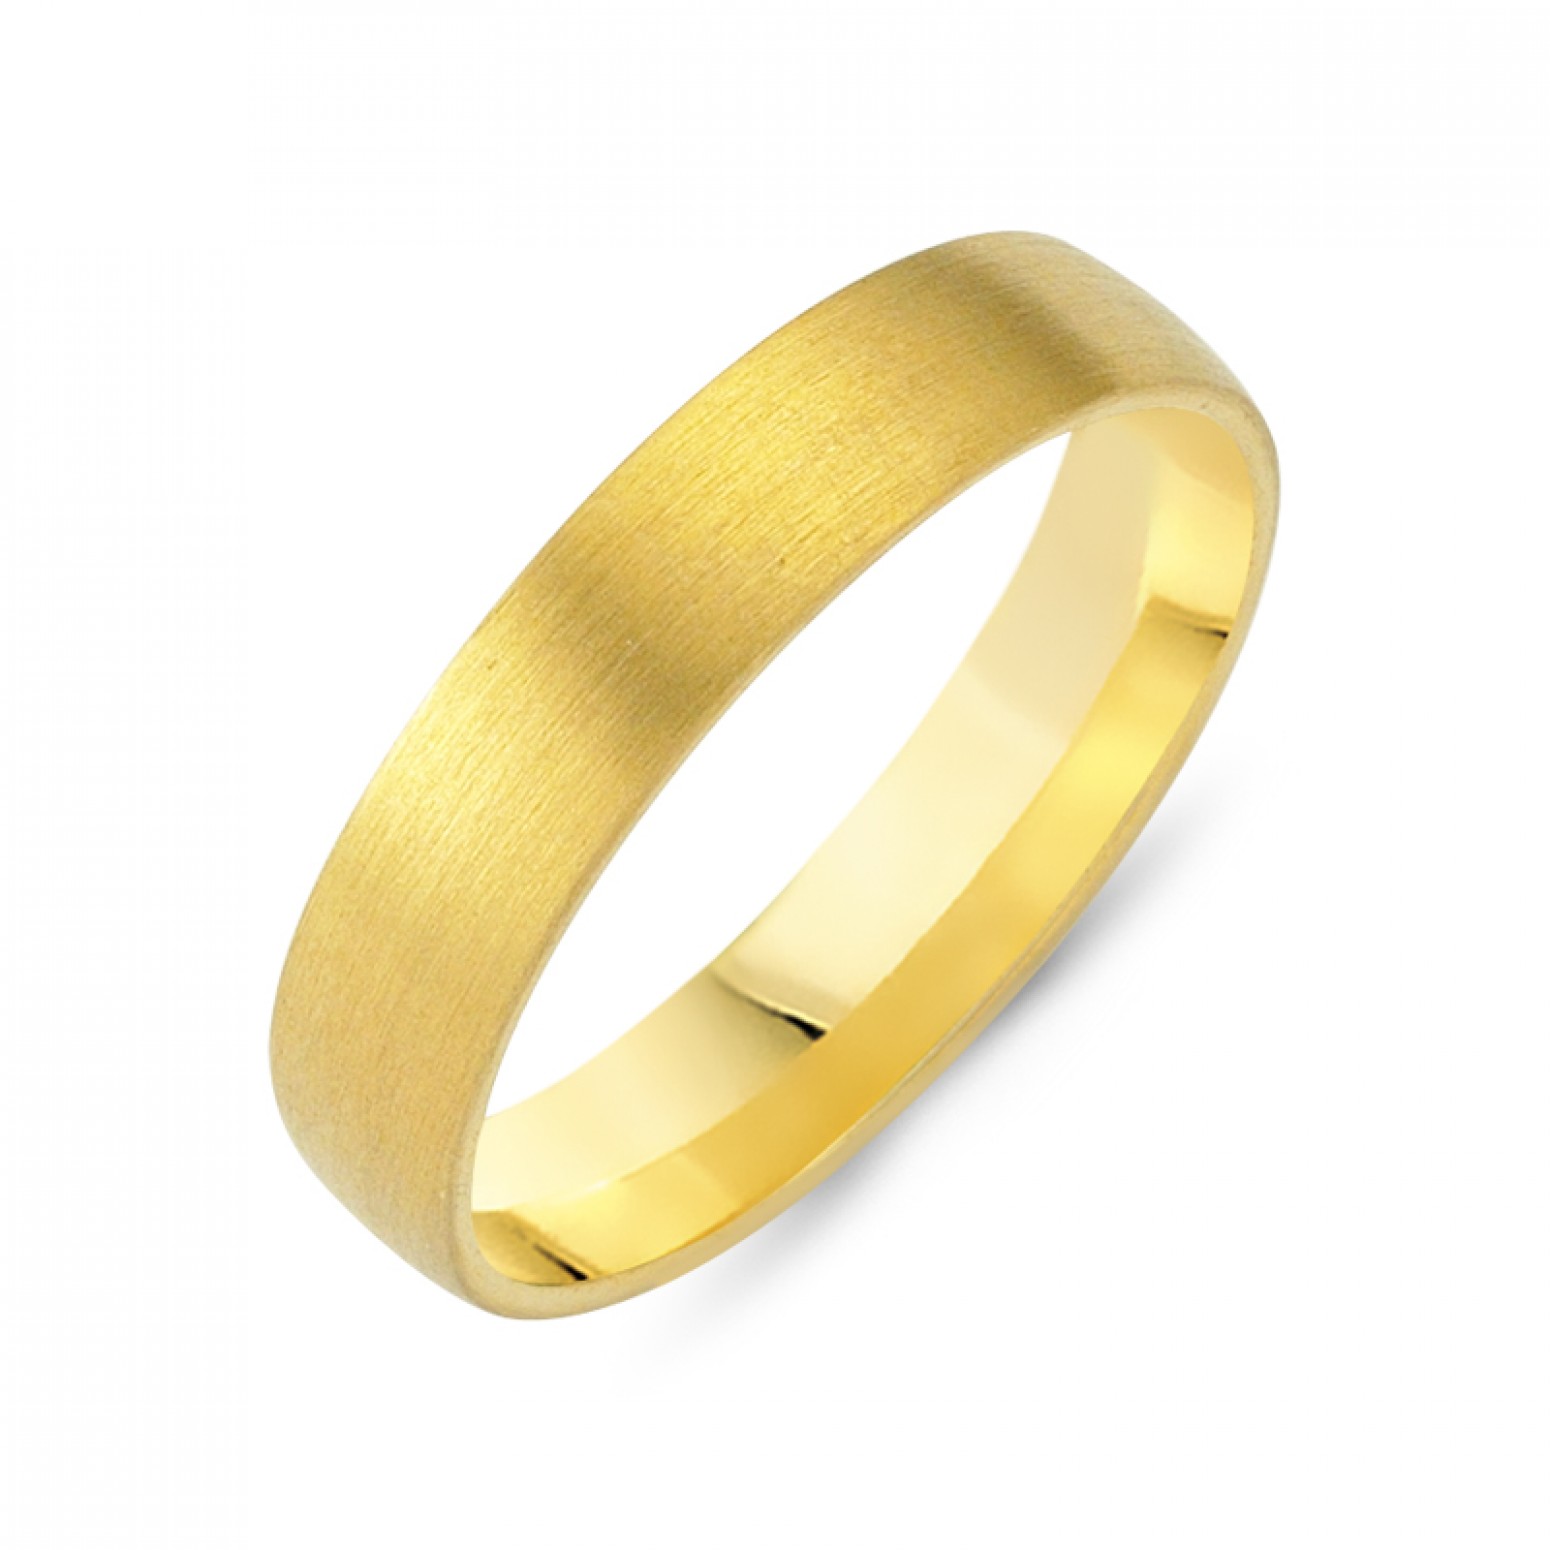 Chrilia wedding rings in yellow gold, K14, pair  da2743 WEDDING RINGS Κοσμηματα - chrilia.gr